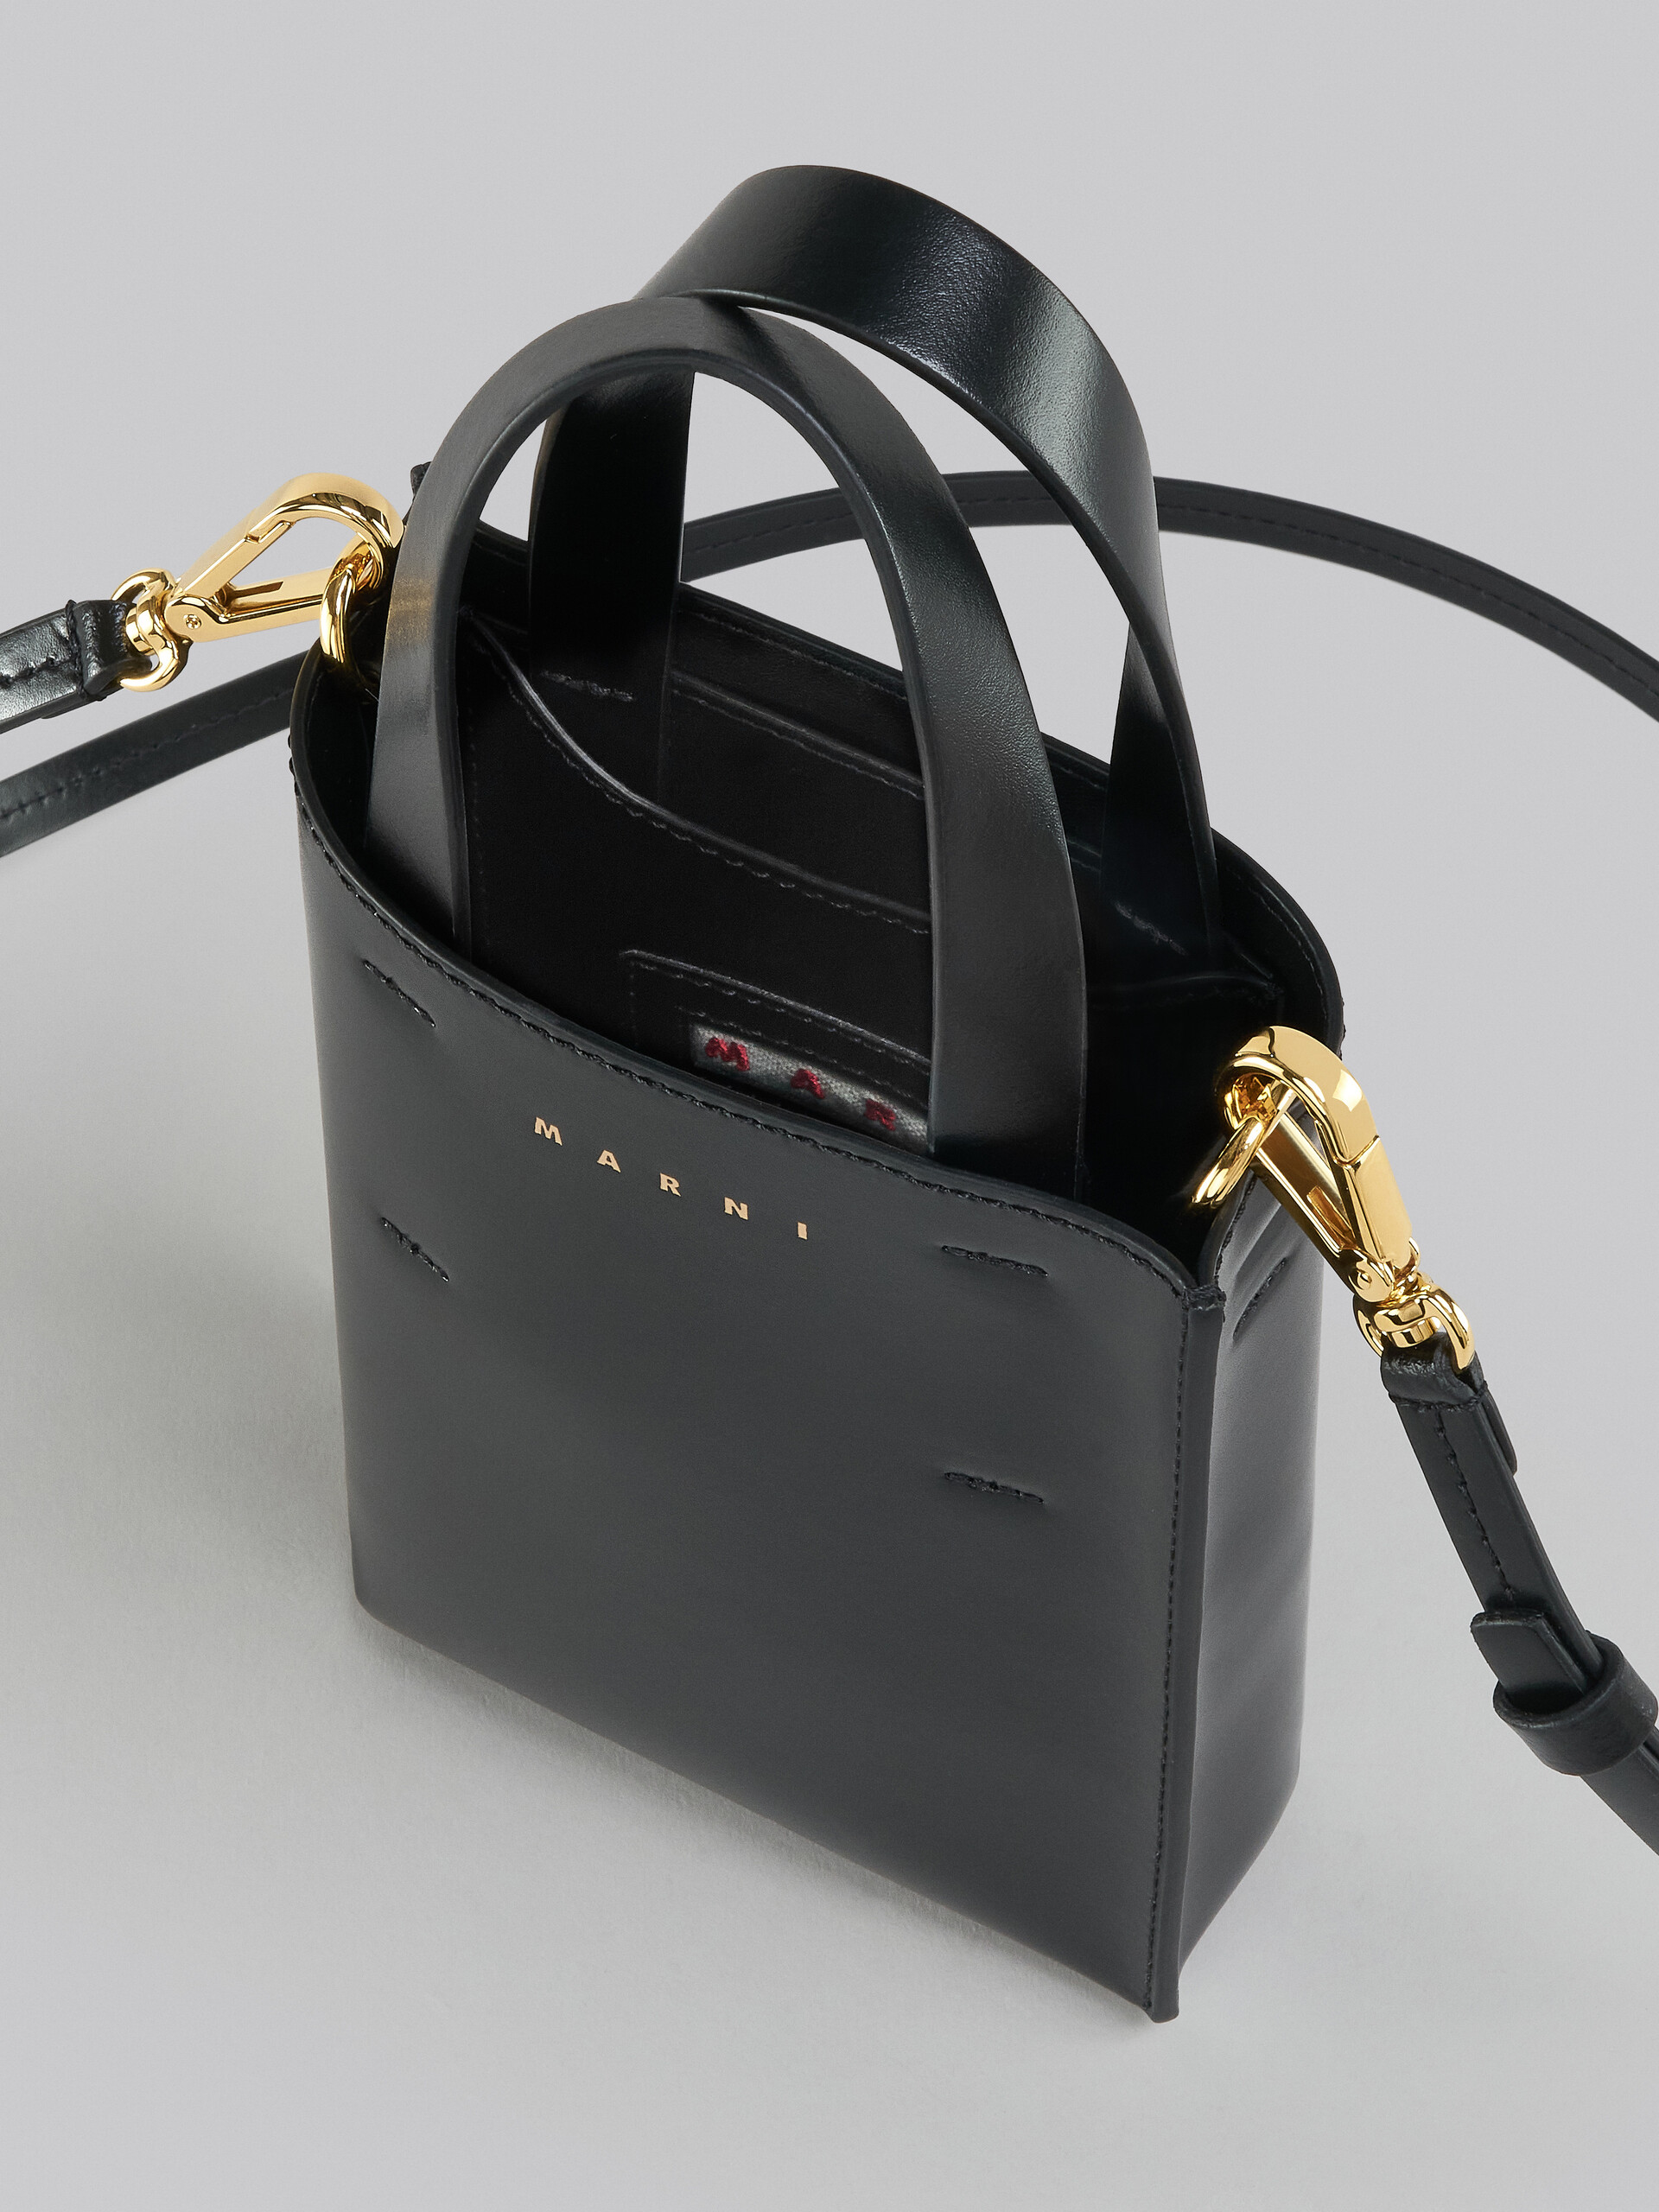 MUSEO bag nano in pelle lucida nera - Borse shopping - Image 4